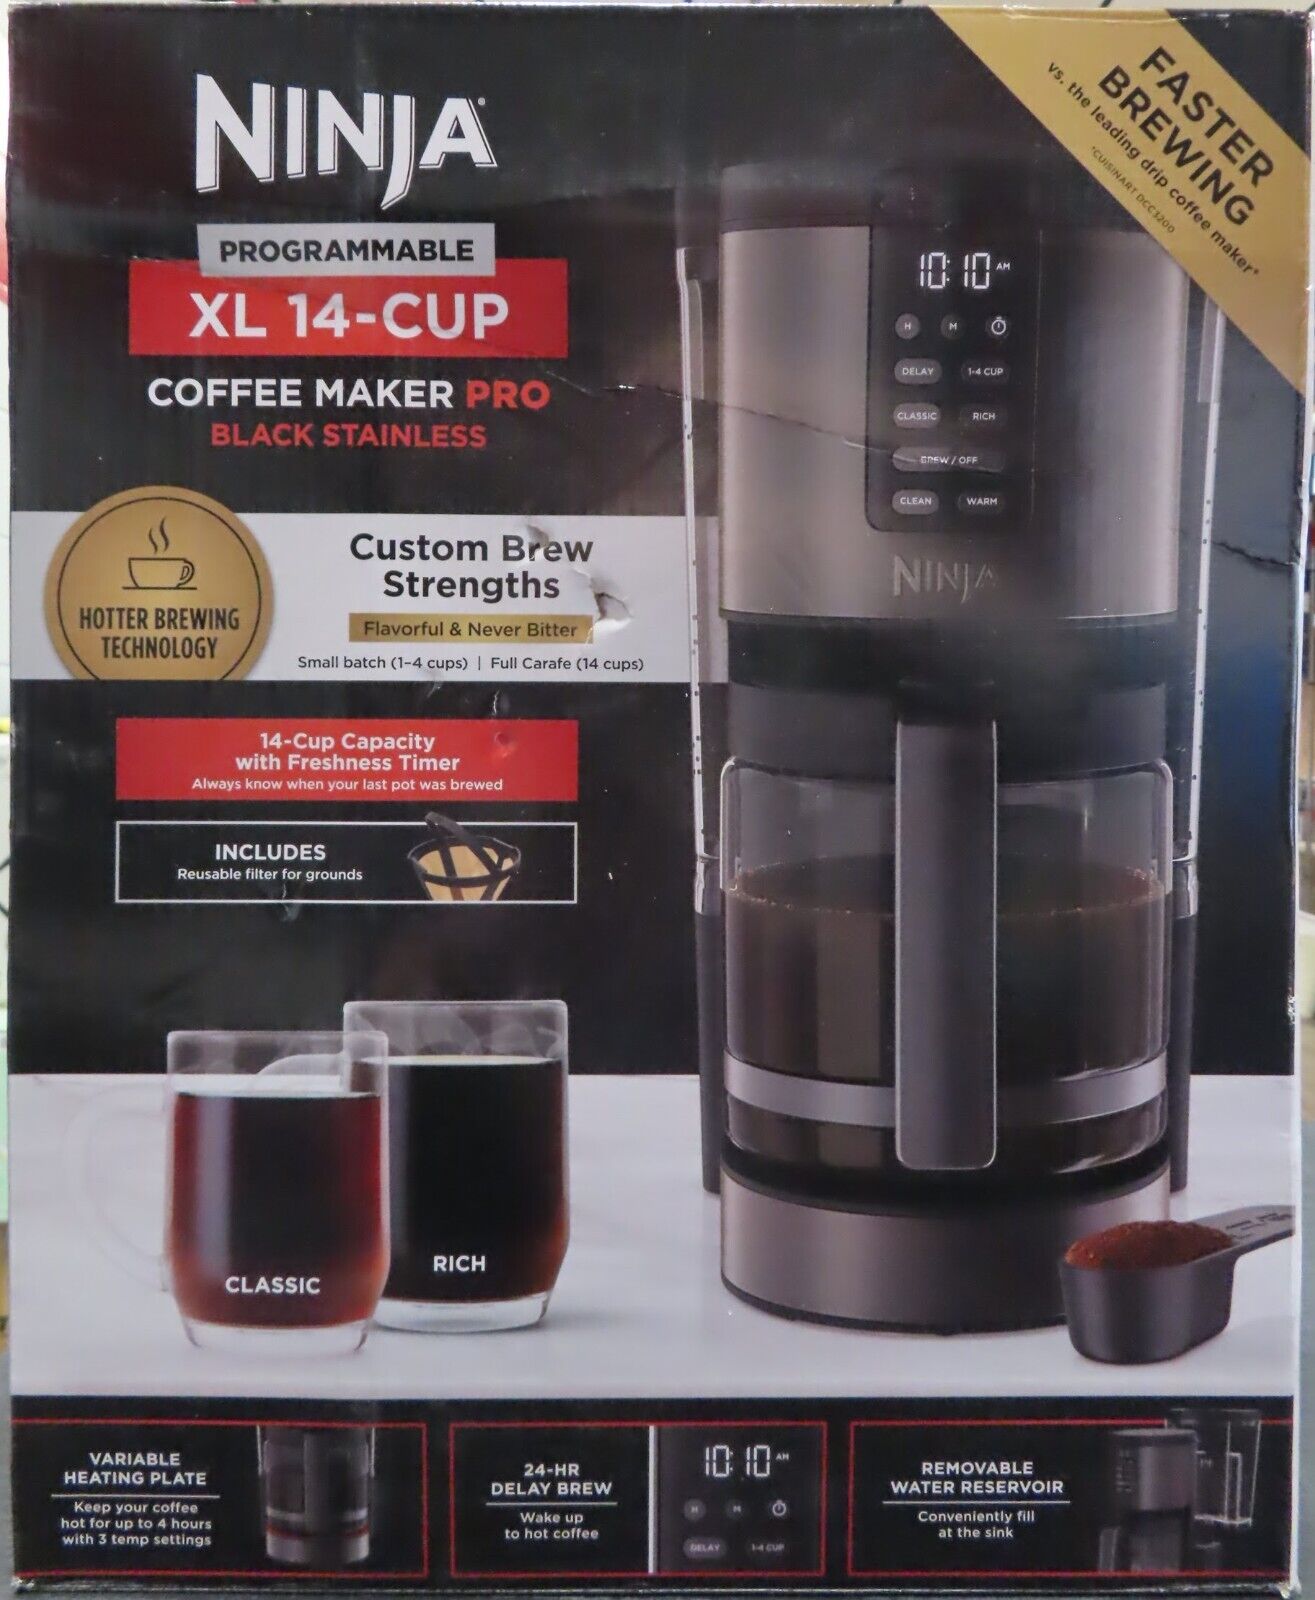 Ninja Programmable XL 14-Cup Coffee Maker PRO, Black &Stainless (DCM201BK)